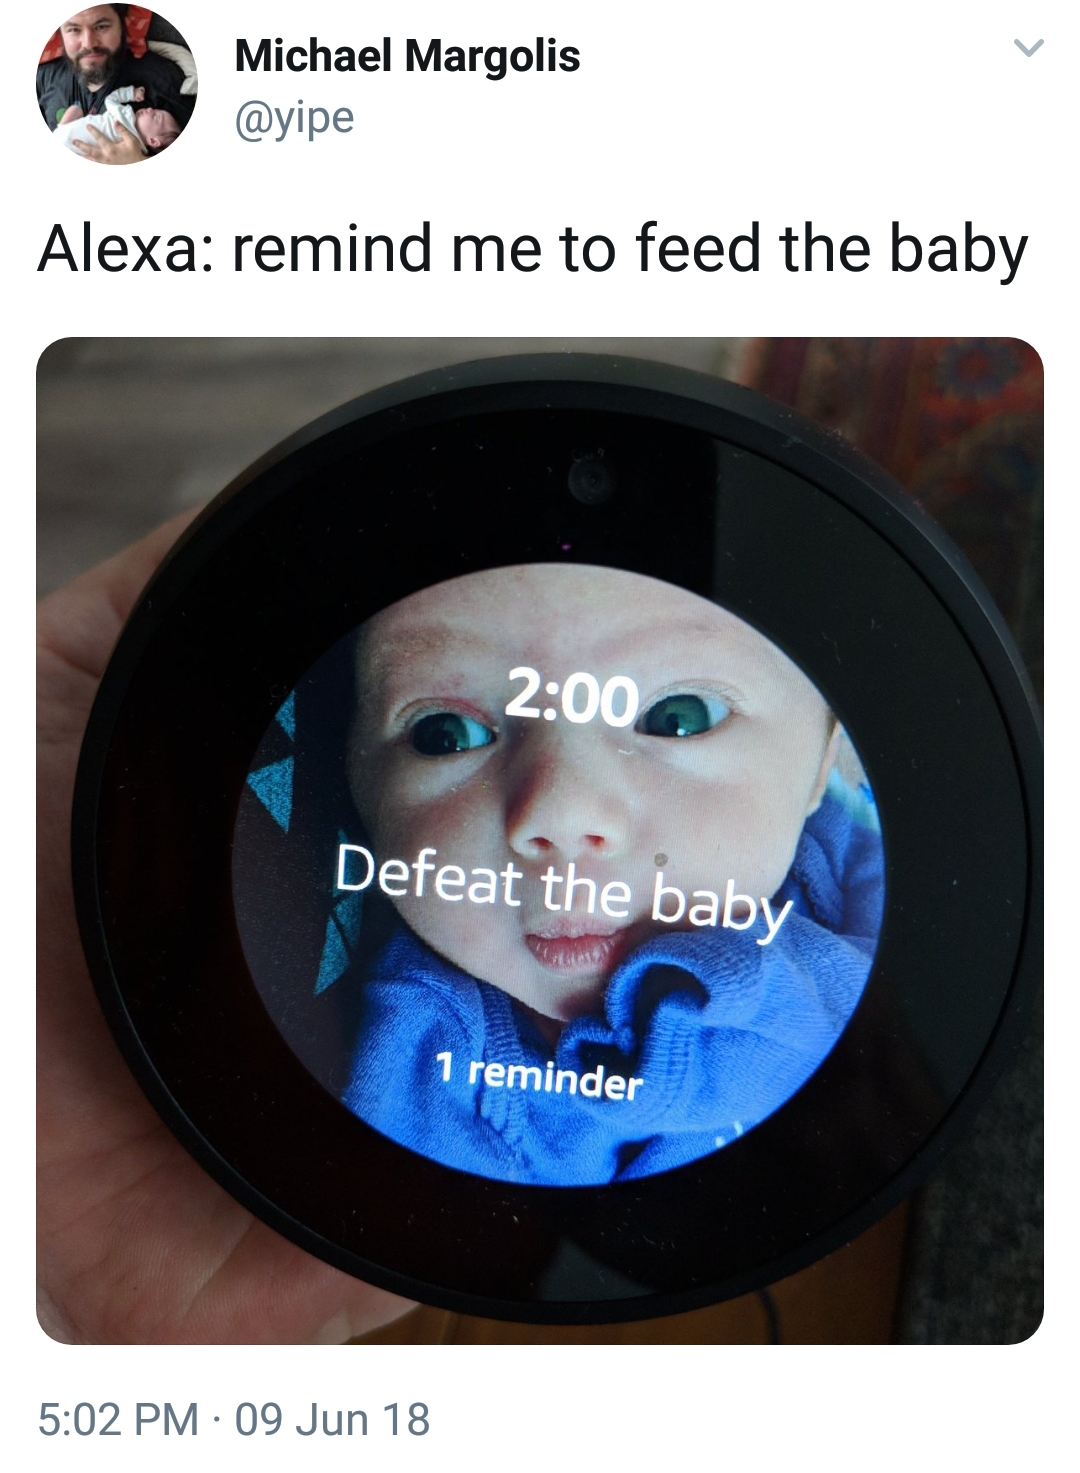 Alexa set reminder to defeat the baby